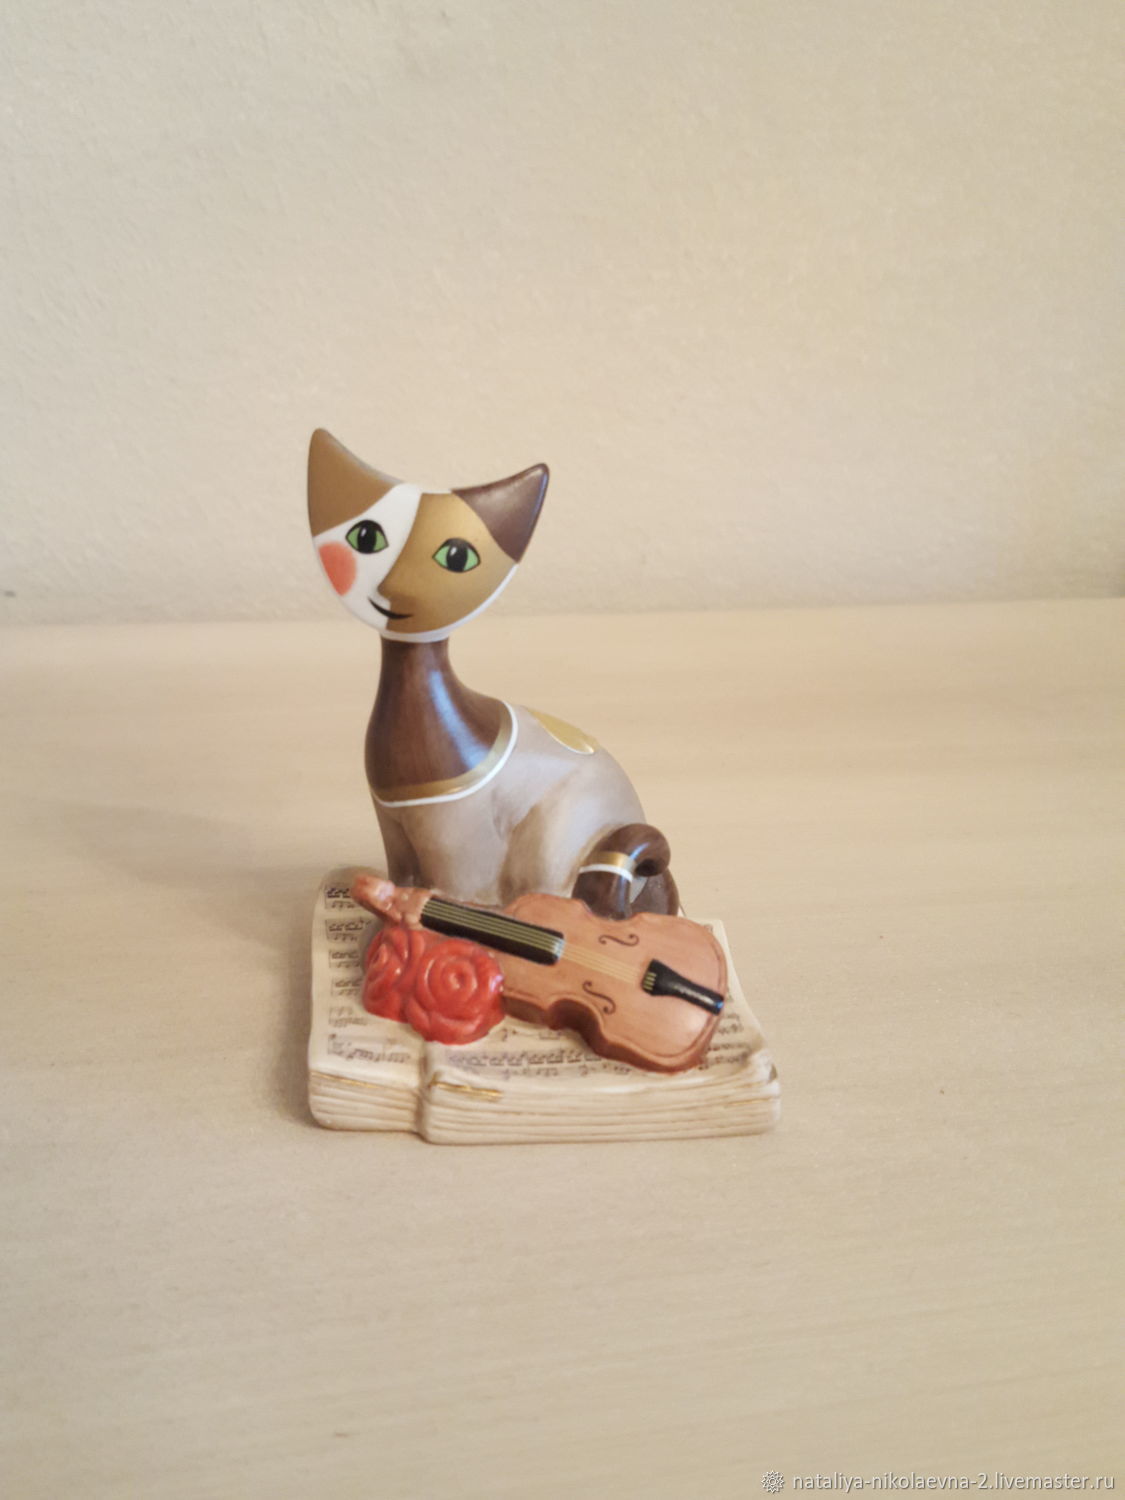 Статуэтка кошка на полку со свисающей лапой